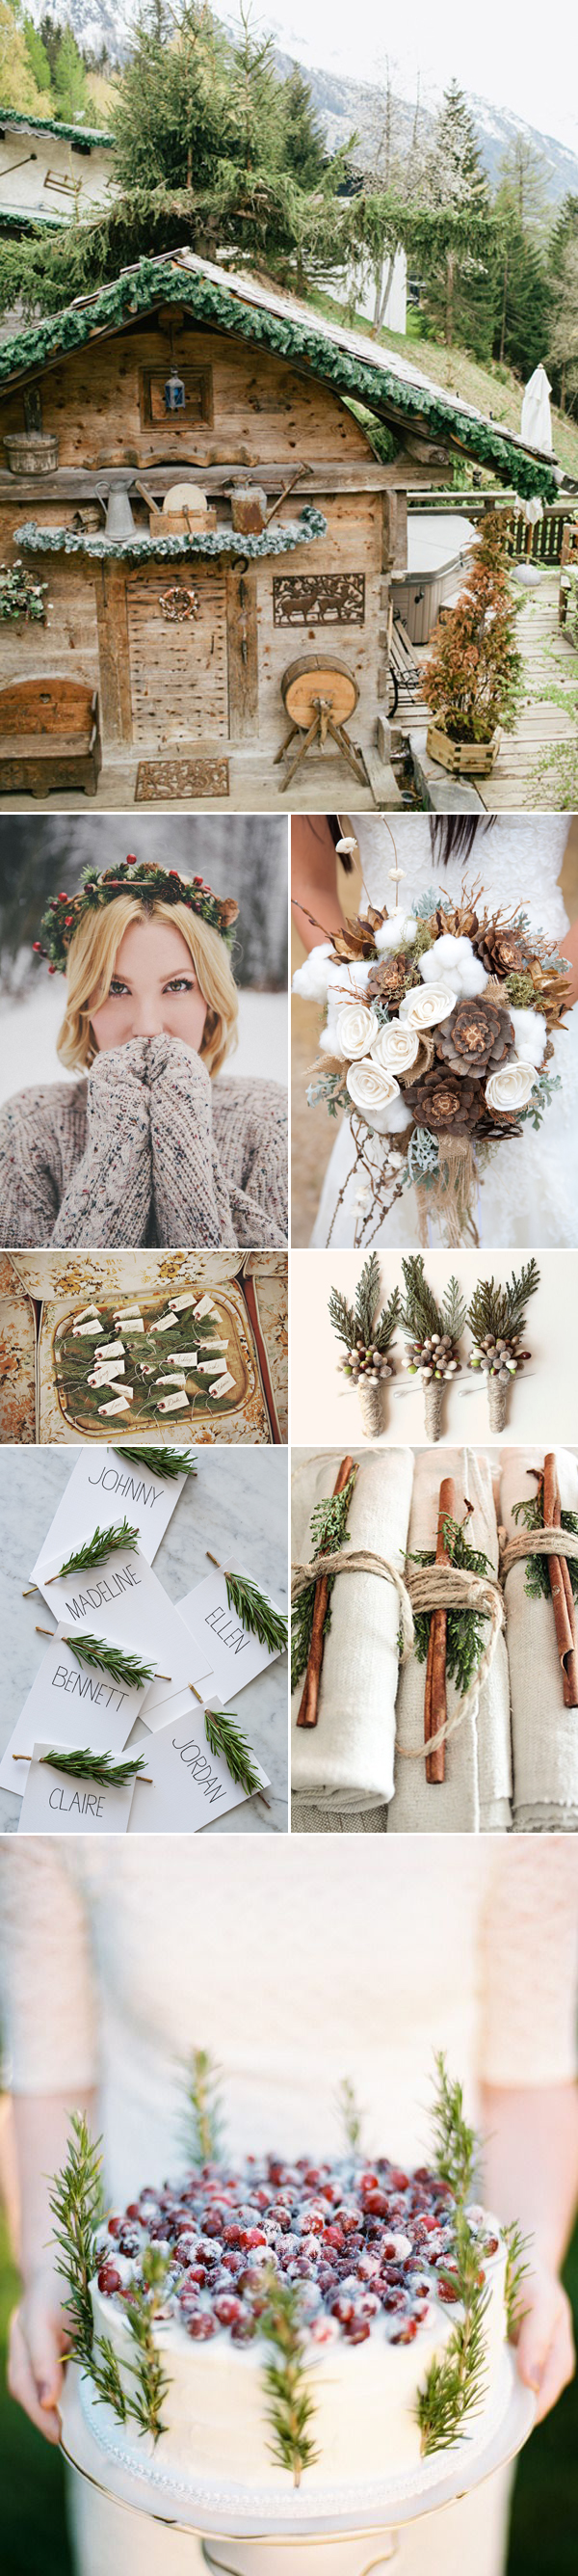 'tis the season - rustic mountain winter wedding inspiration | via junebugweddings.com